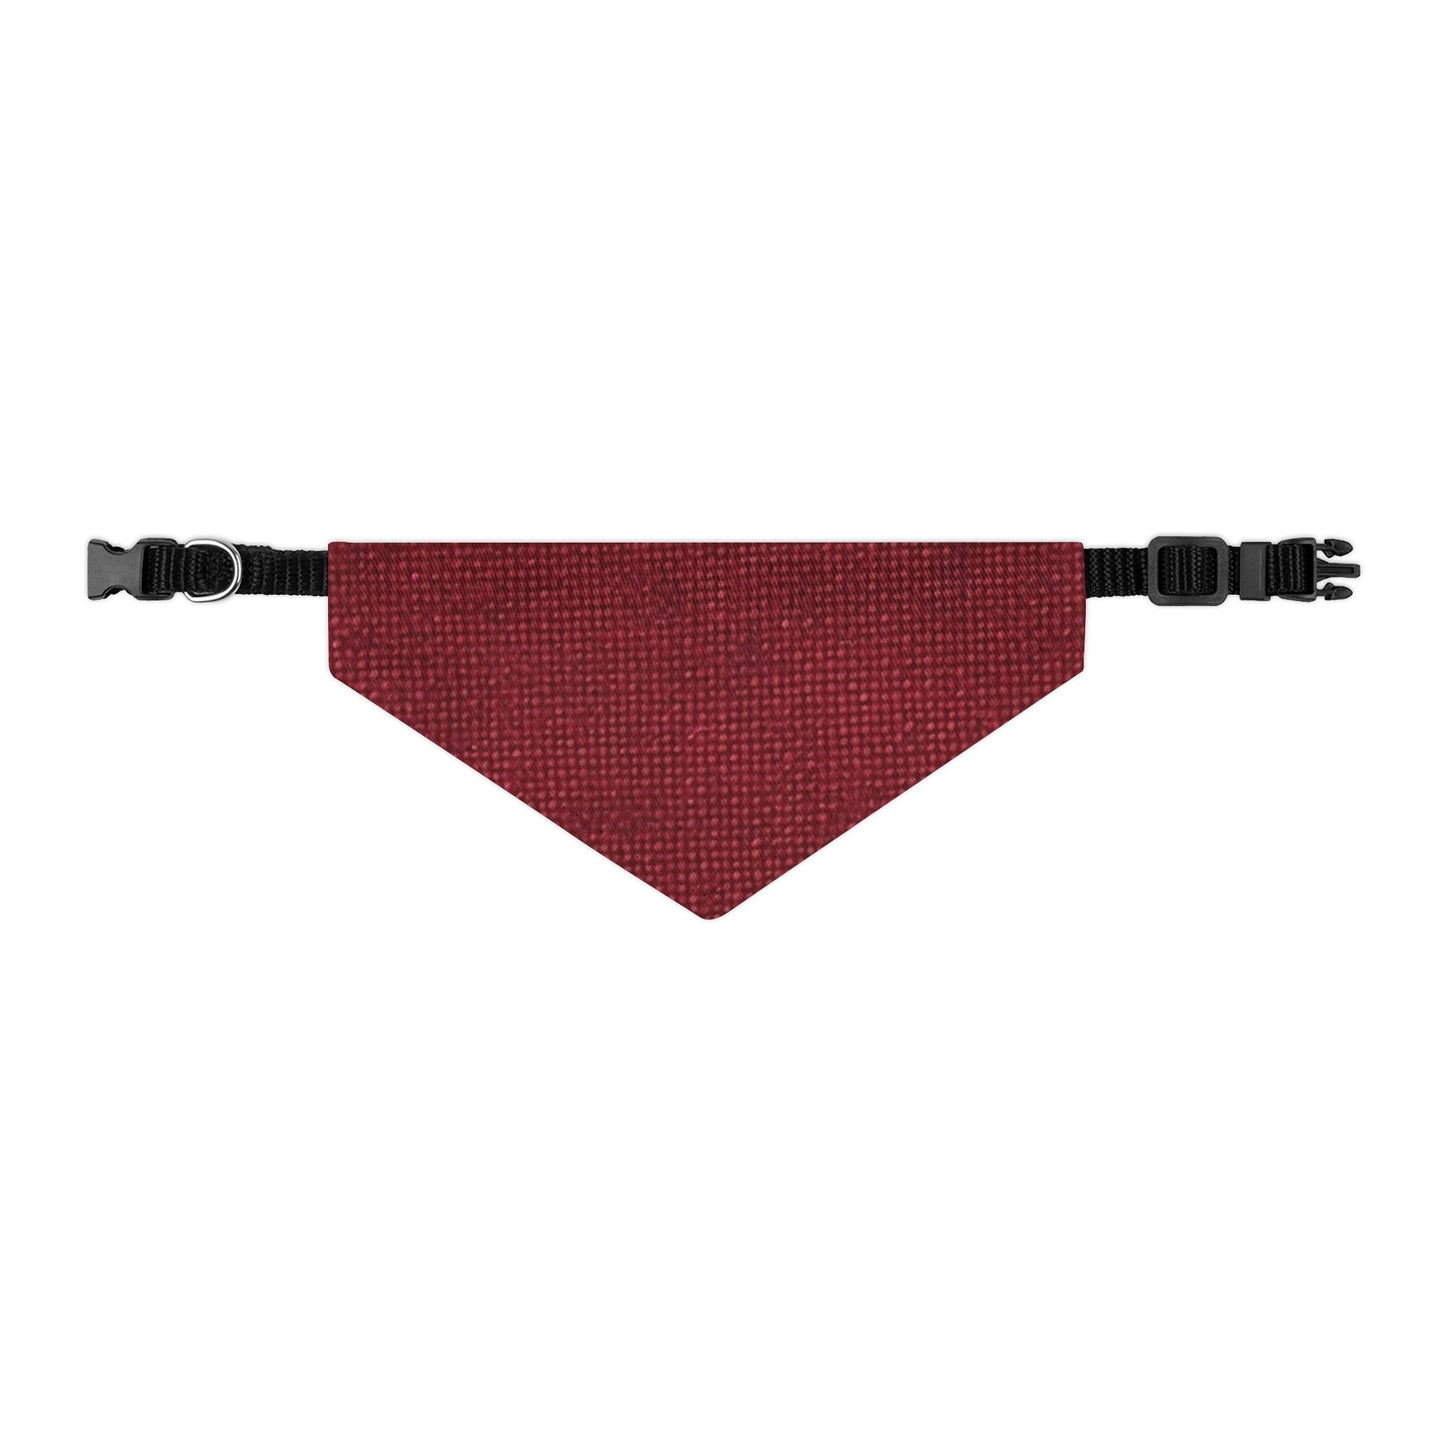 Seamless Texture - Maroon/Burgundy Denim-Inspired Fabric - Pet Bandana Collar